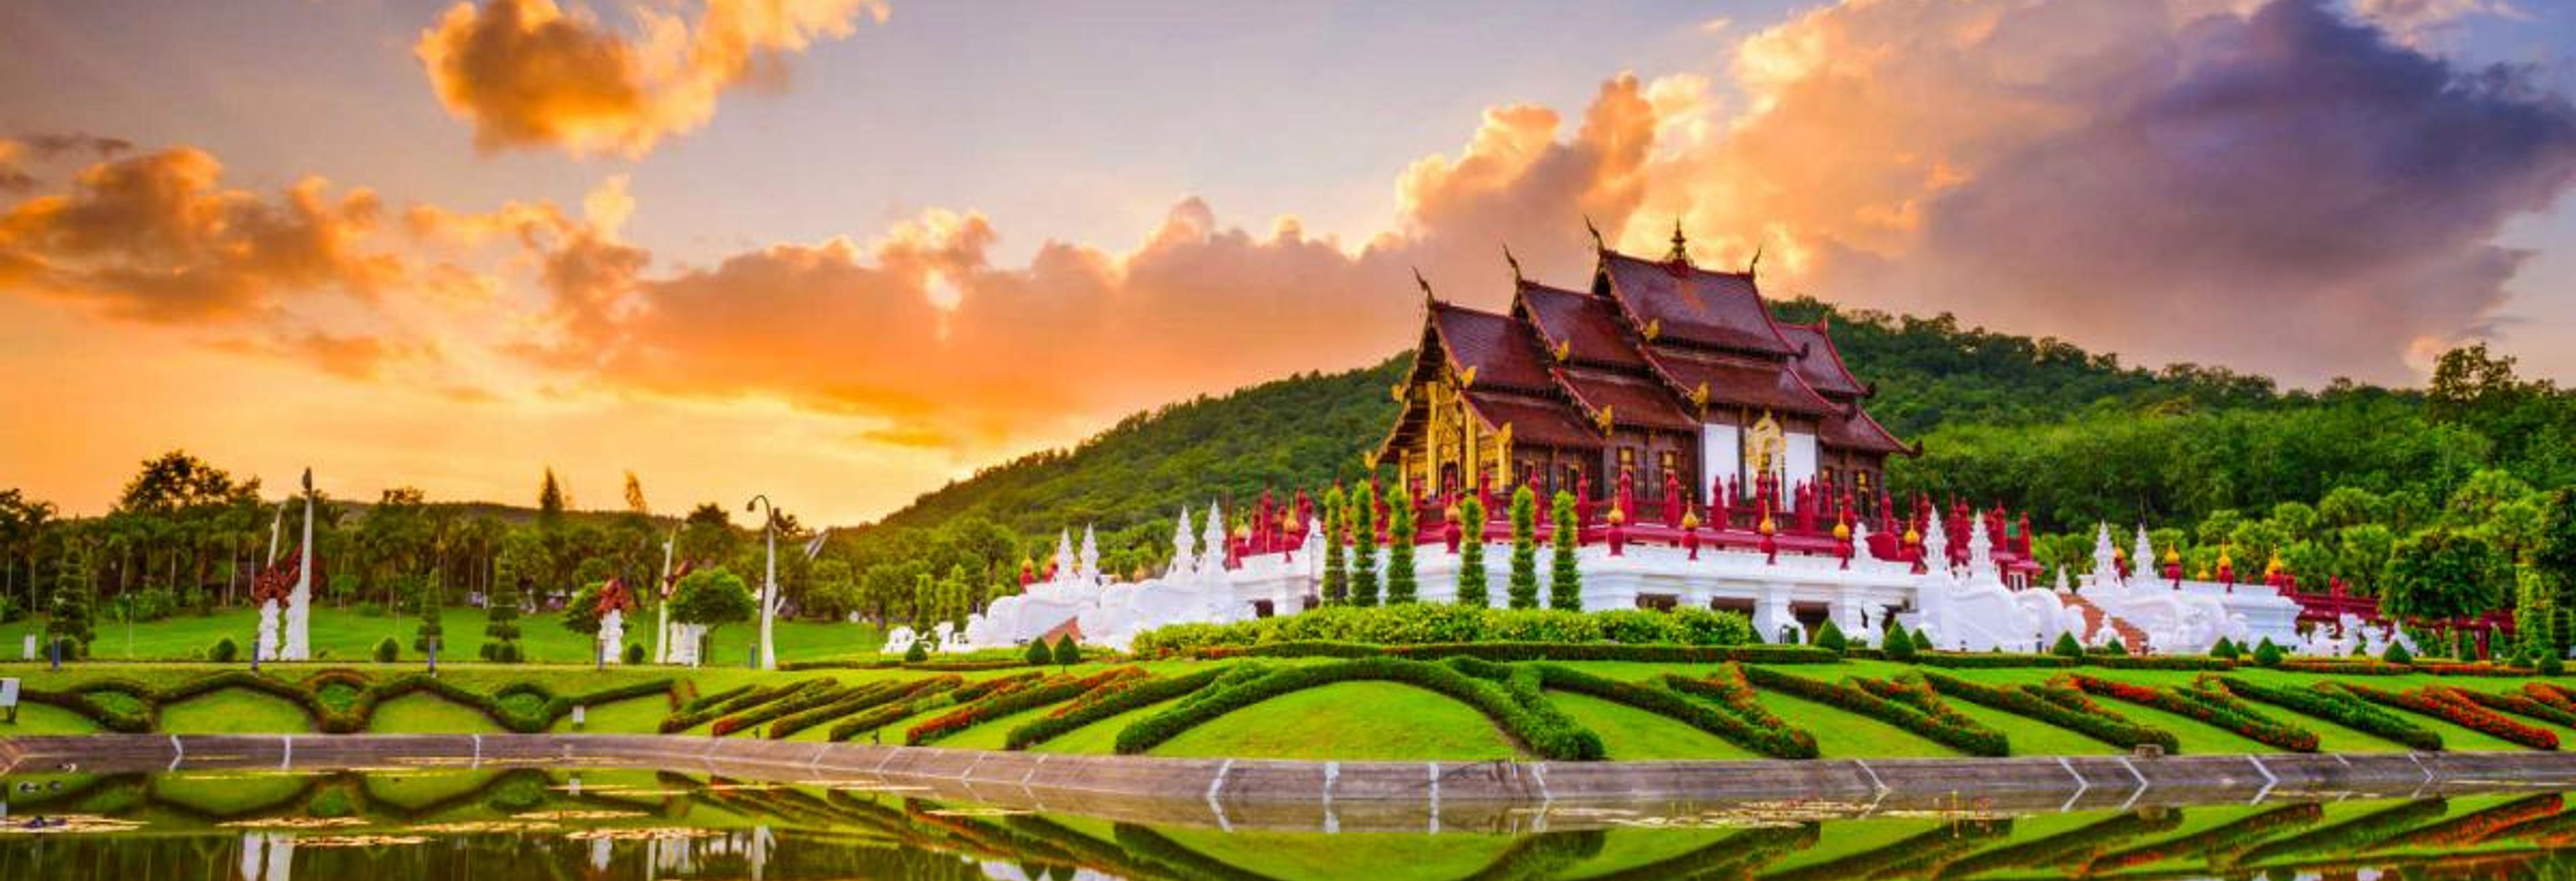 justfly royal flora garden chiang mai thailand